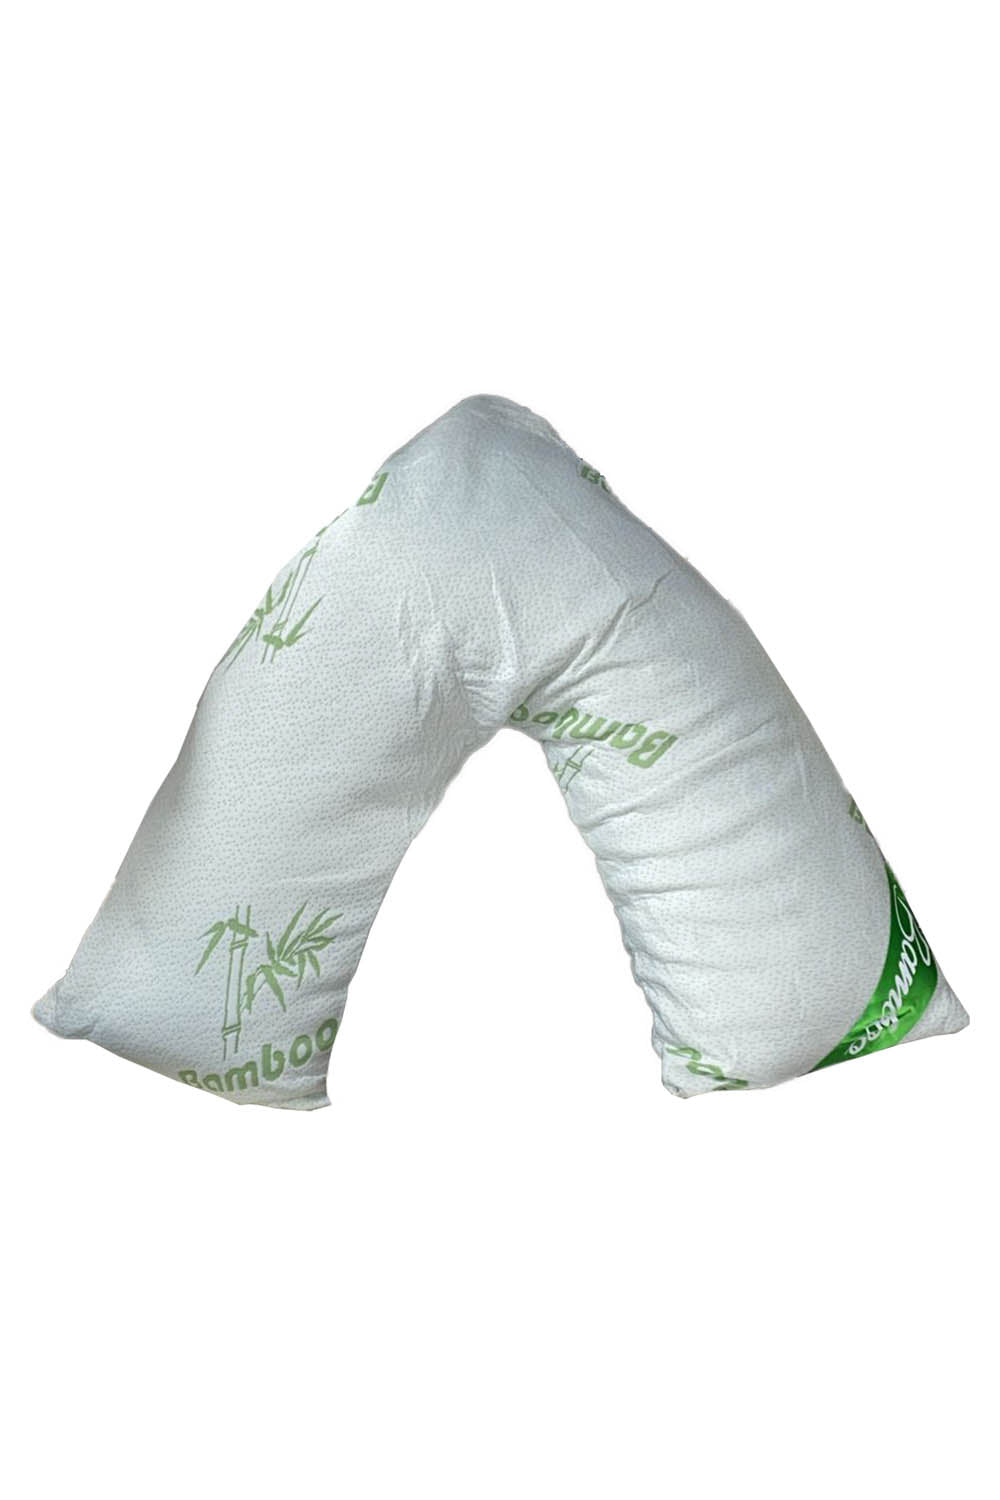 Bamboo V Shaped Pillow Memory Foam Orthopedic Maternity Neck Back Support